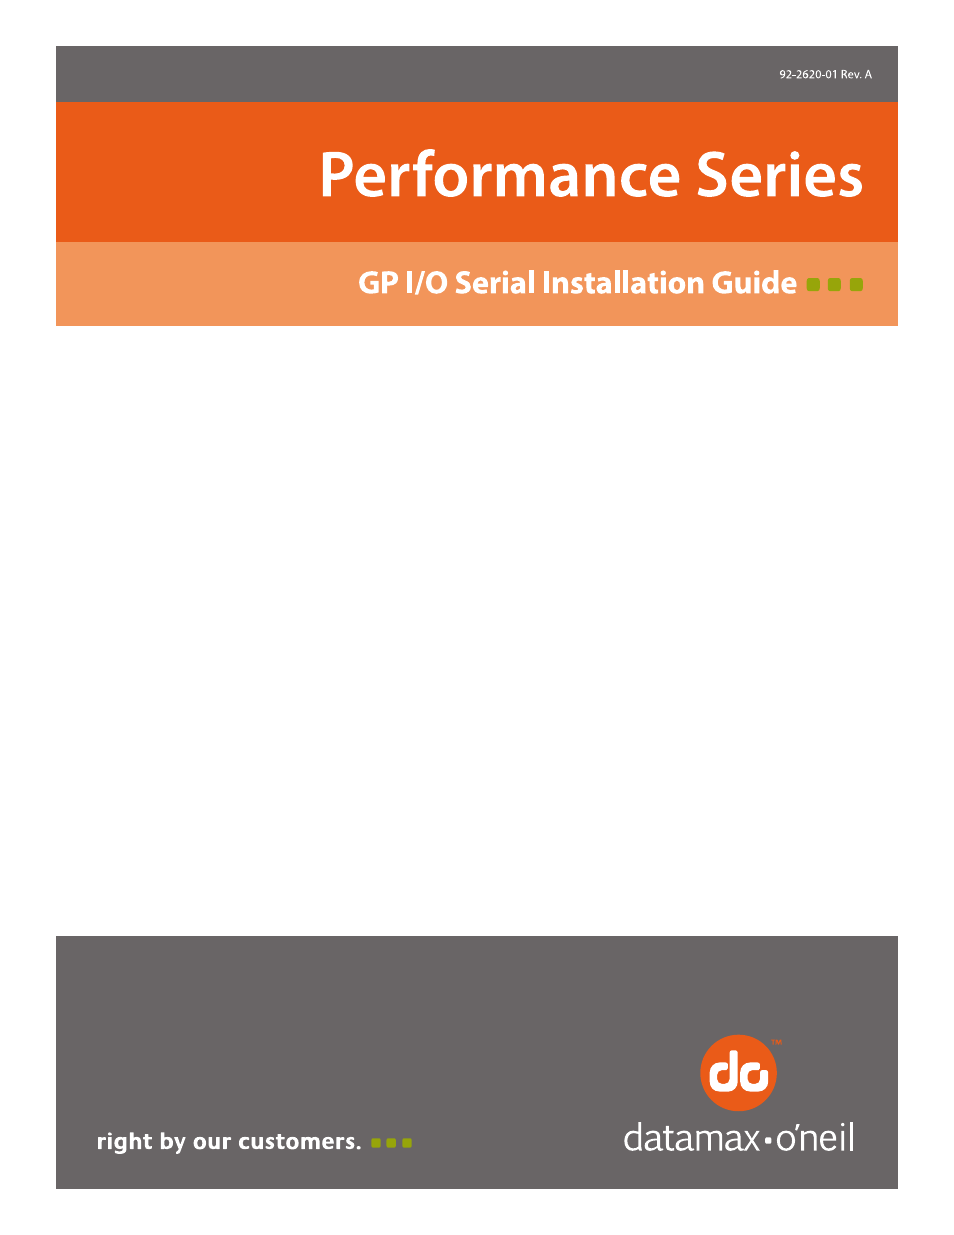 Performance series GPIO